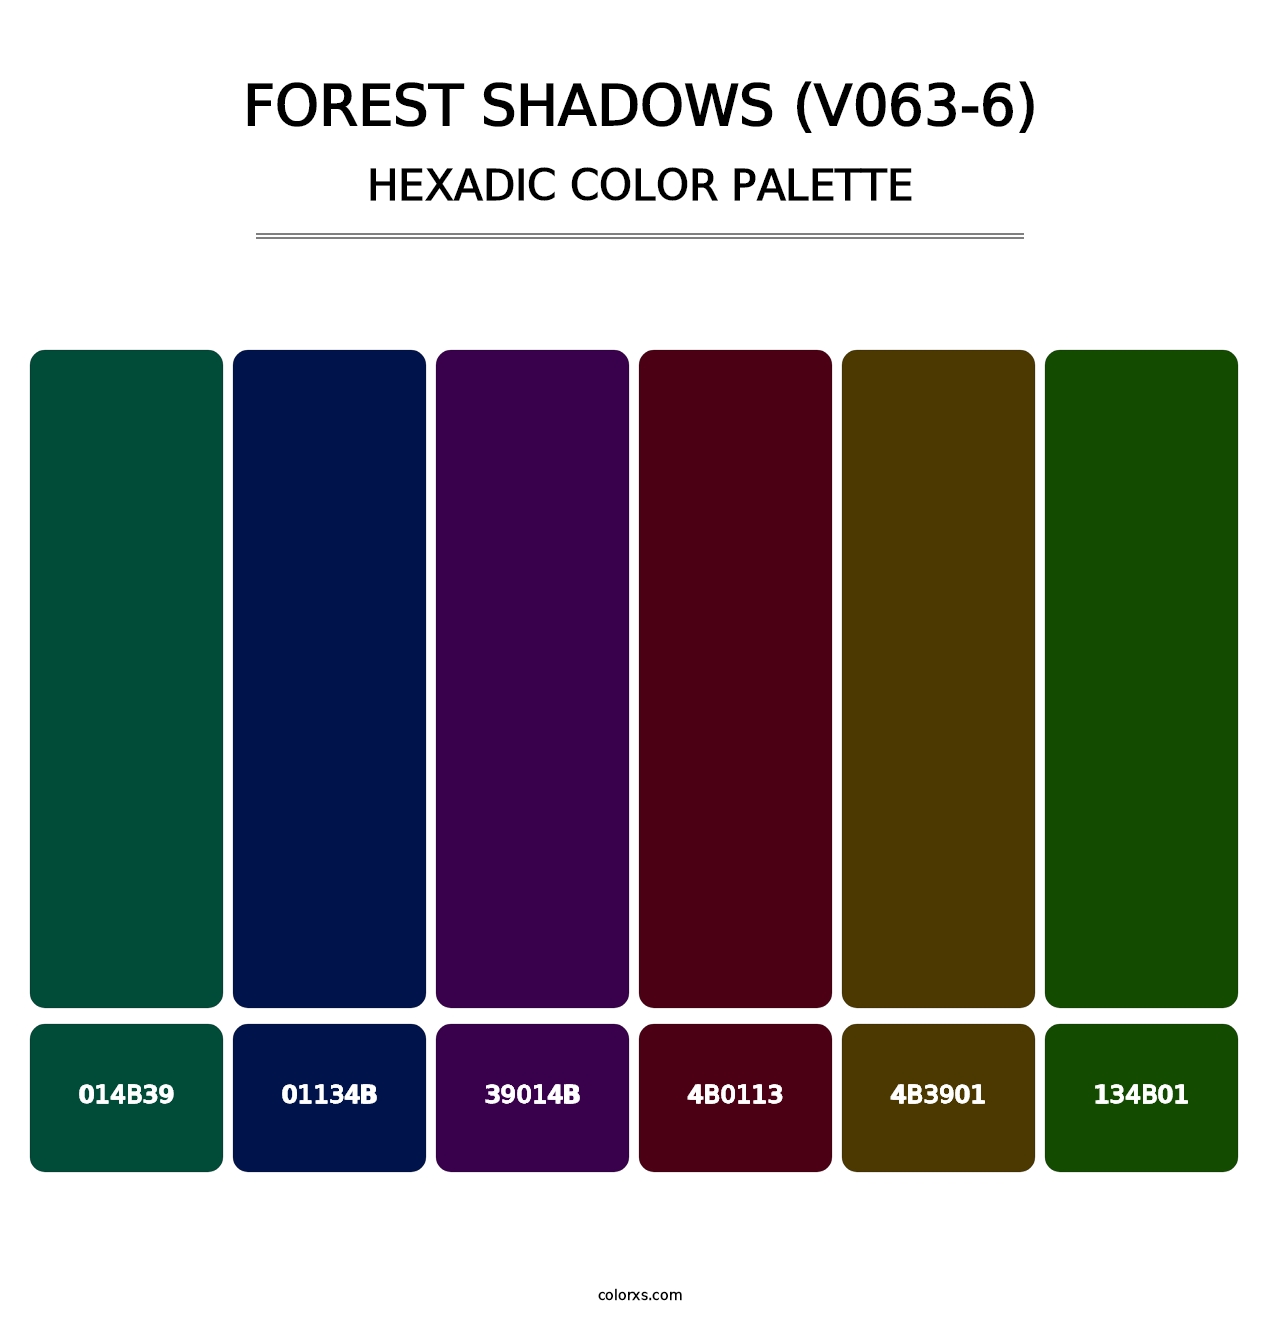 Forest Shadows (V063-6) - Hexadic Color Palette